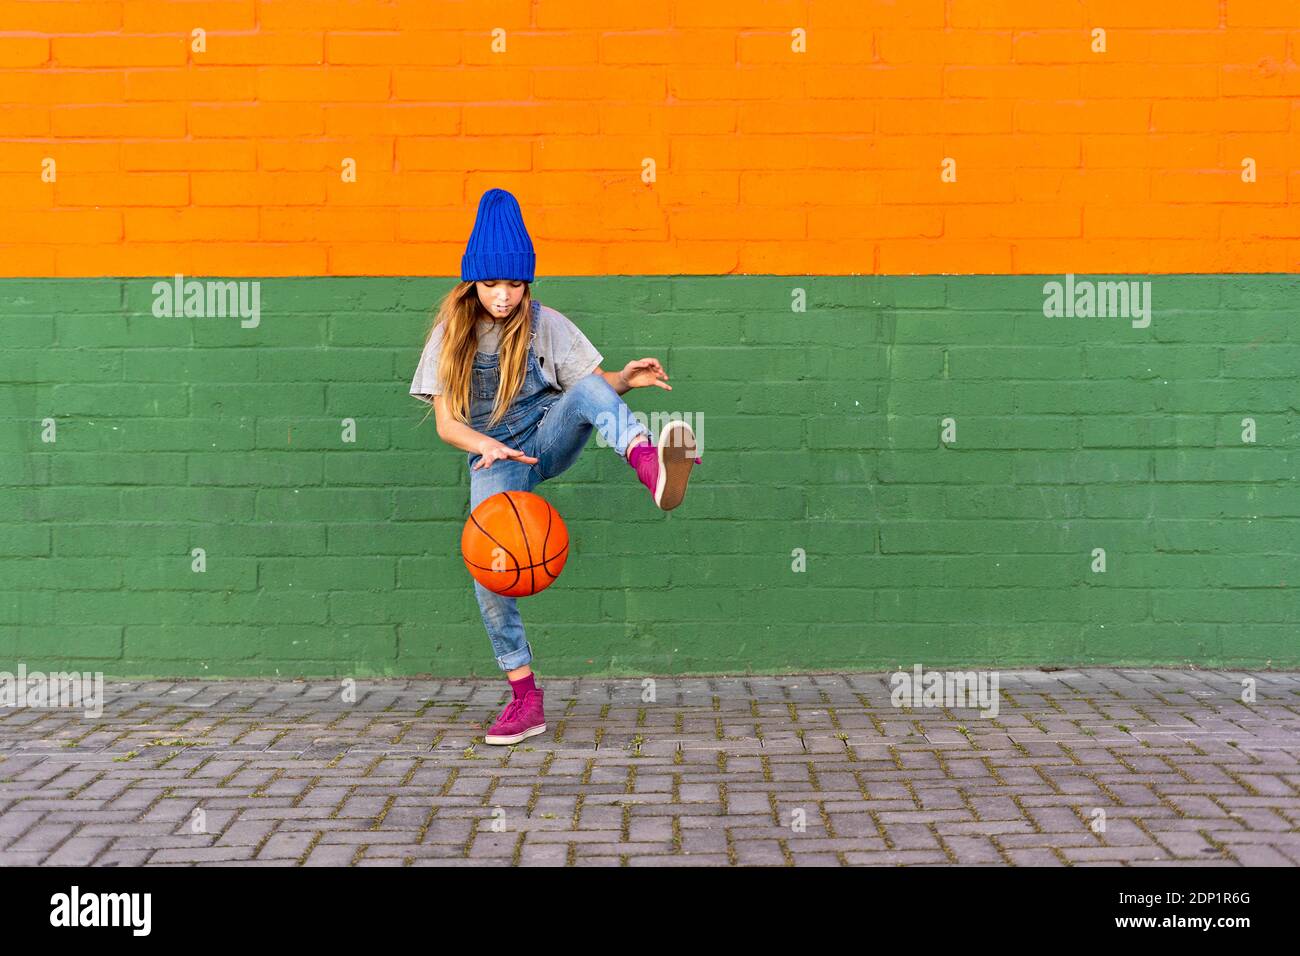 Young girl playing basketball, dribbling and lifting leg Stock Photo